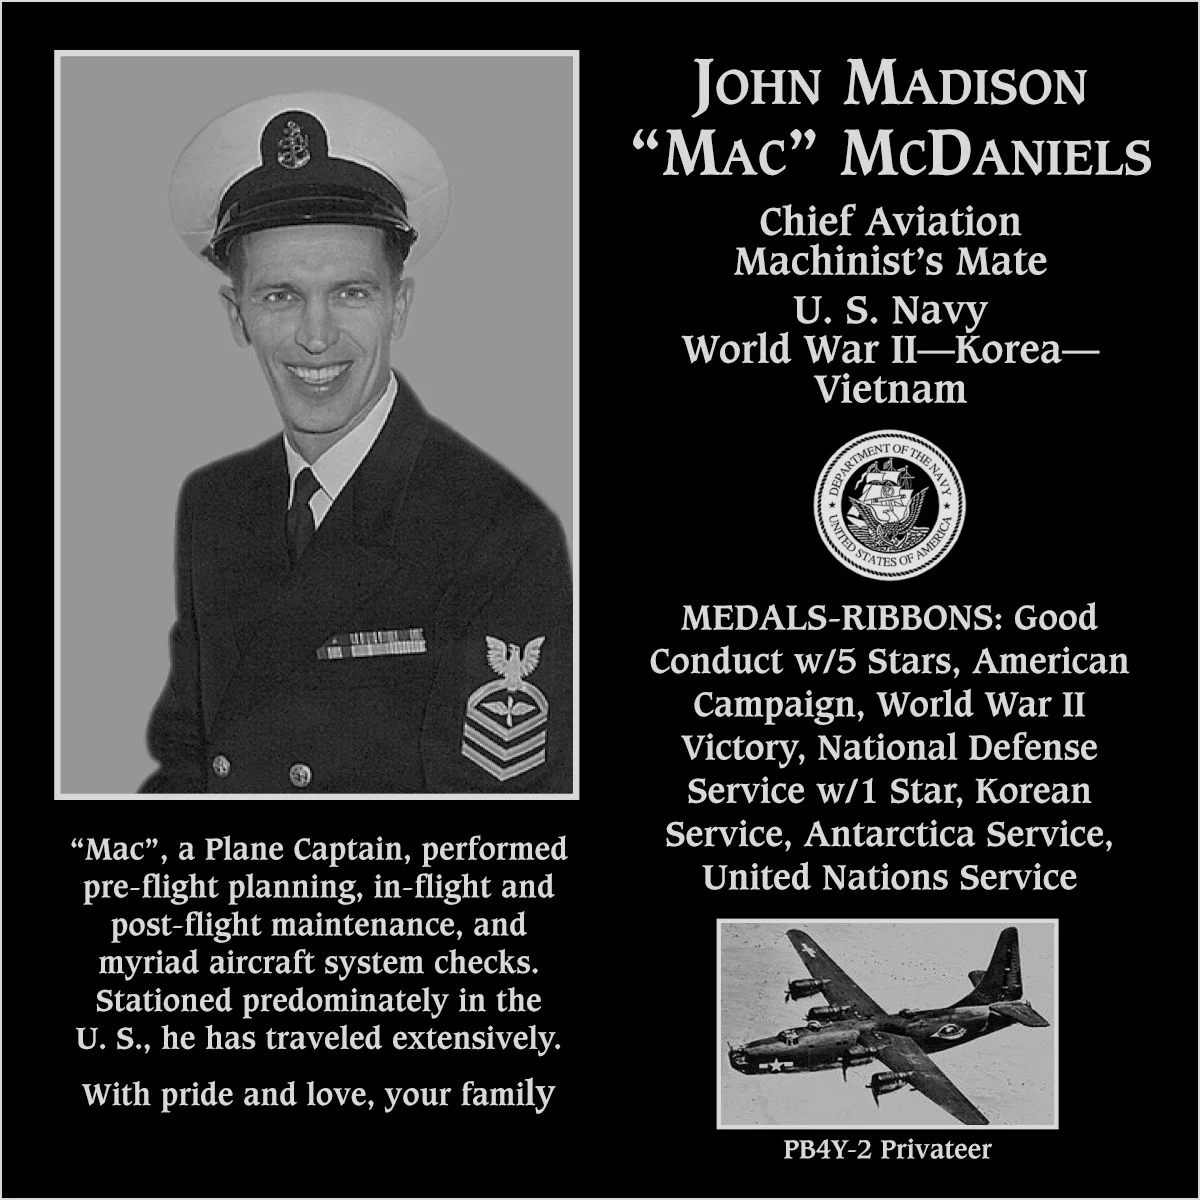 John Madison “Mac” McDaniels